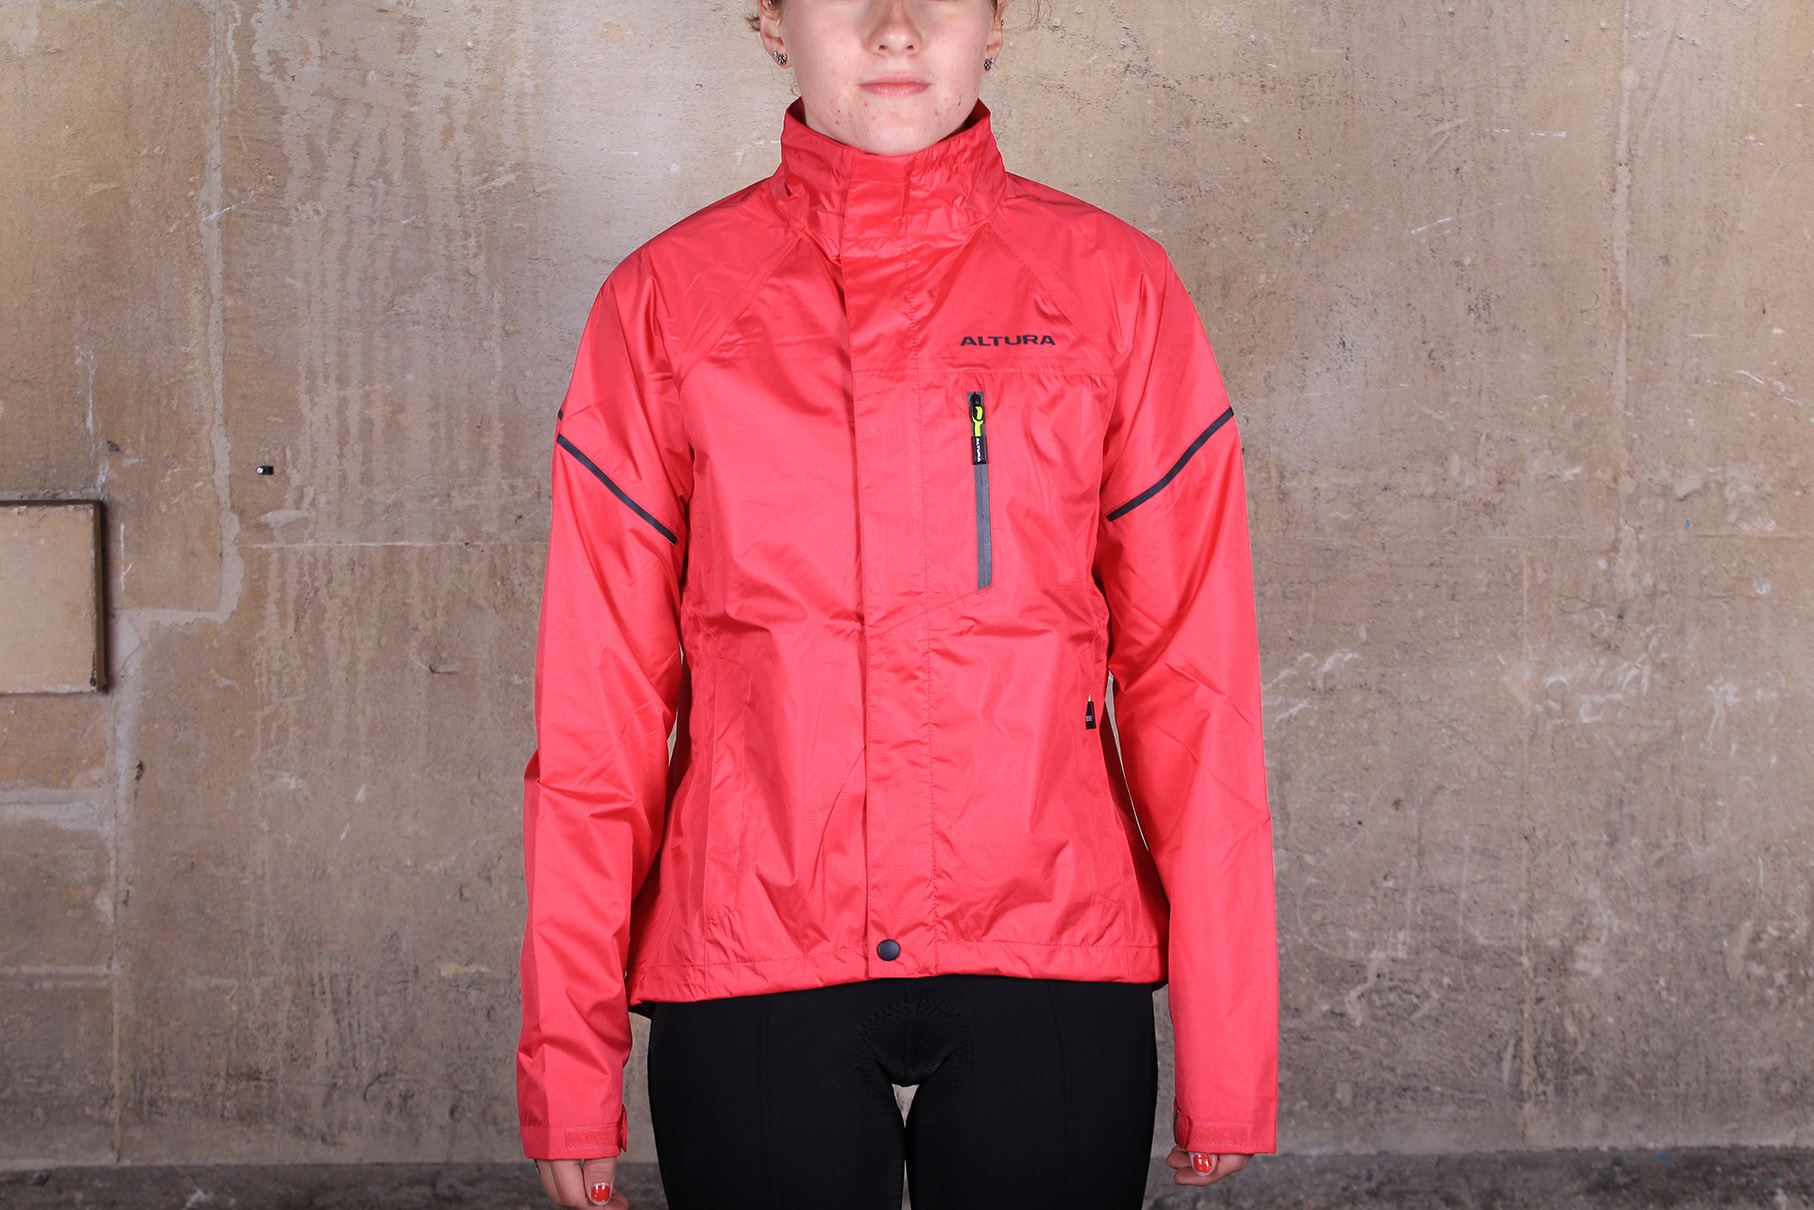 altura womens waterproof cycling jacket